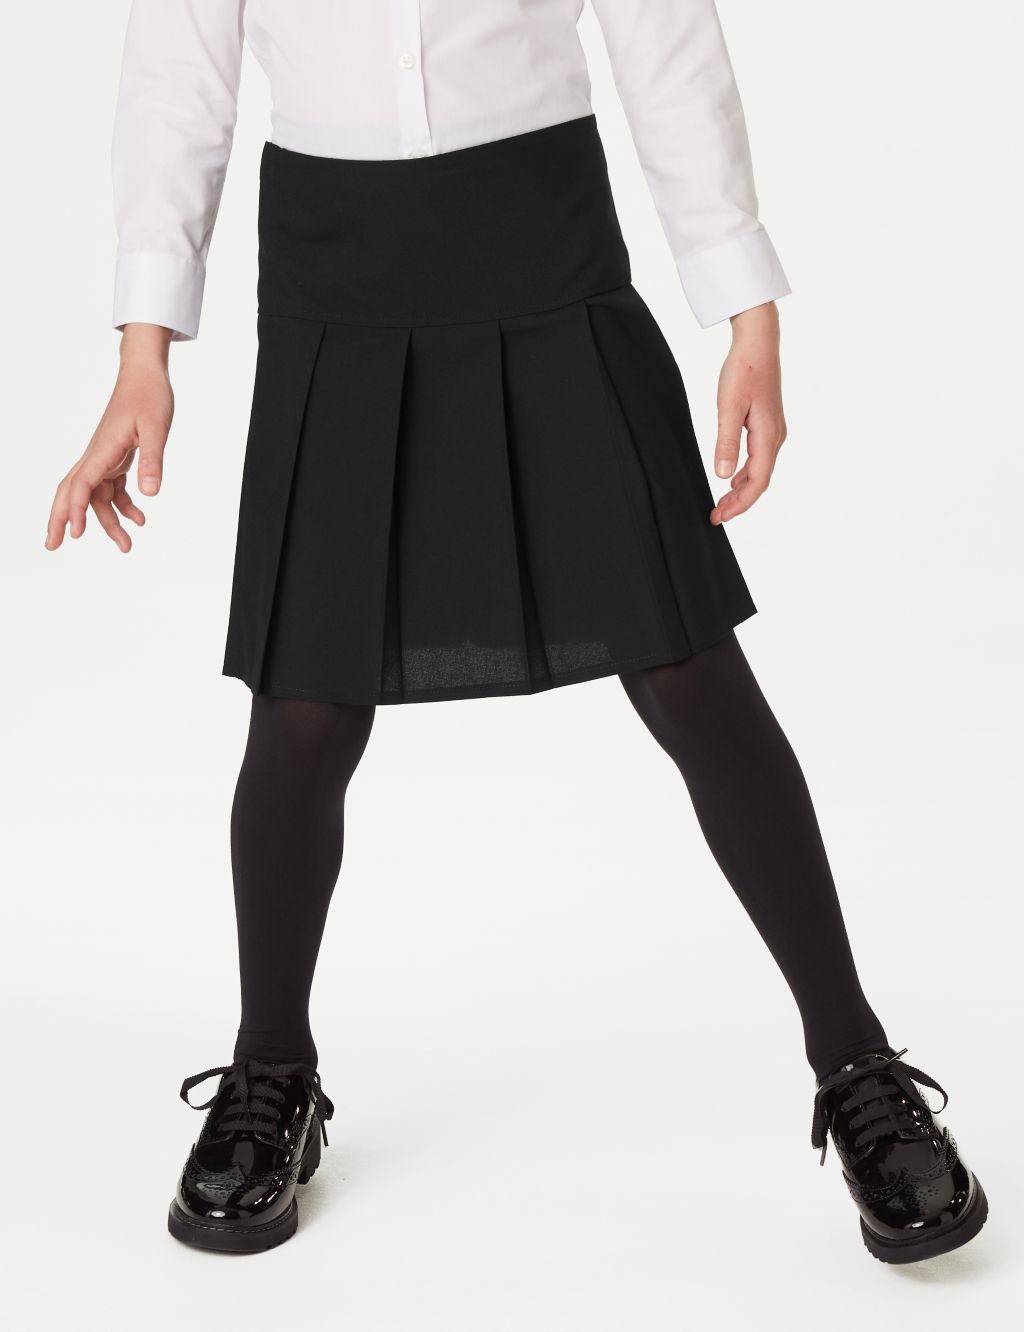 2pk Girls' Crease Resistant School Skirts (2-16 Yrs) image 2